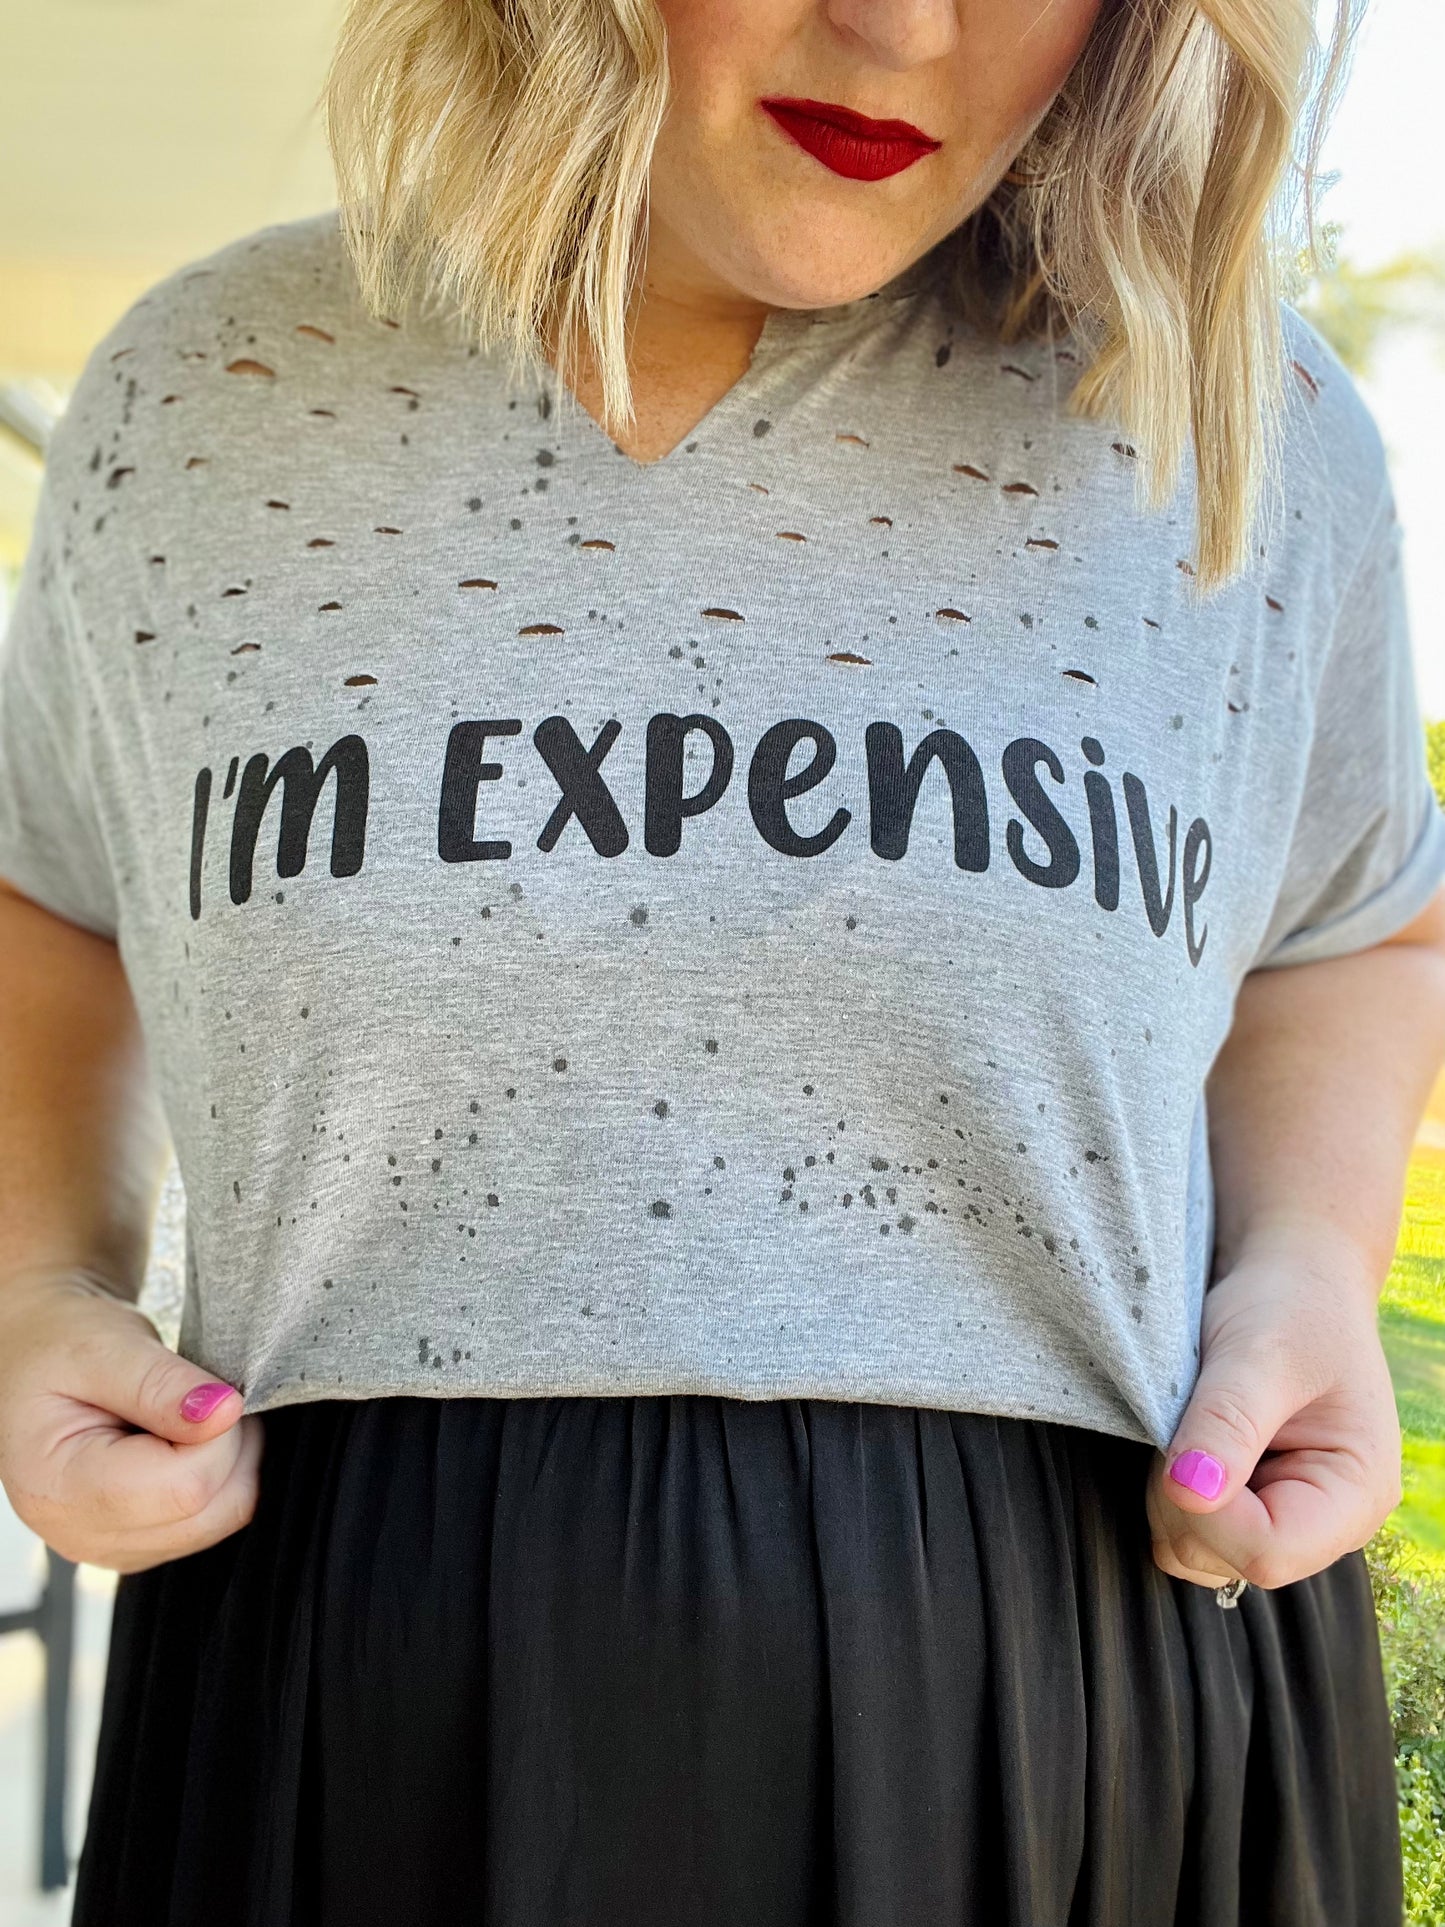 "I'm Expensive" Distressed Tee